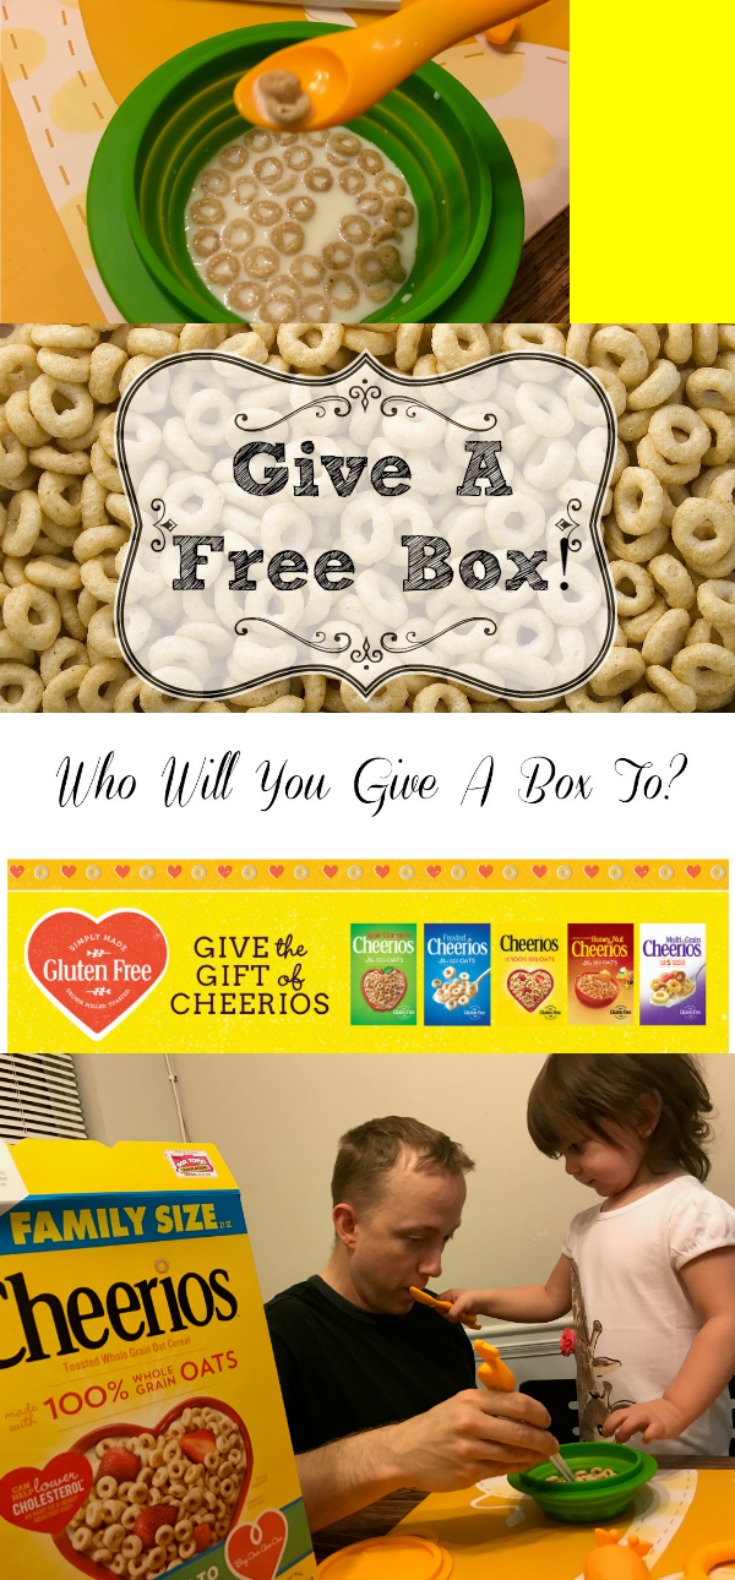 Get_a_box_Give_a_box_free_cheerios